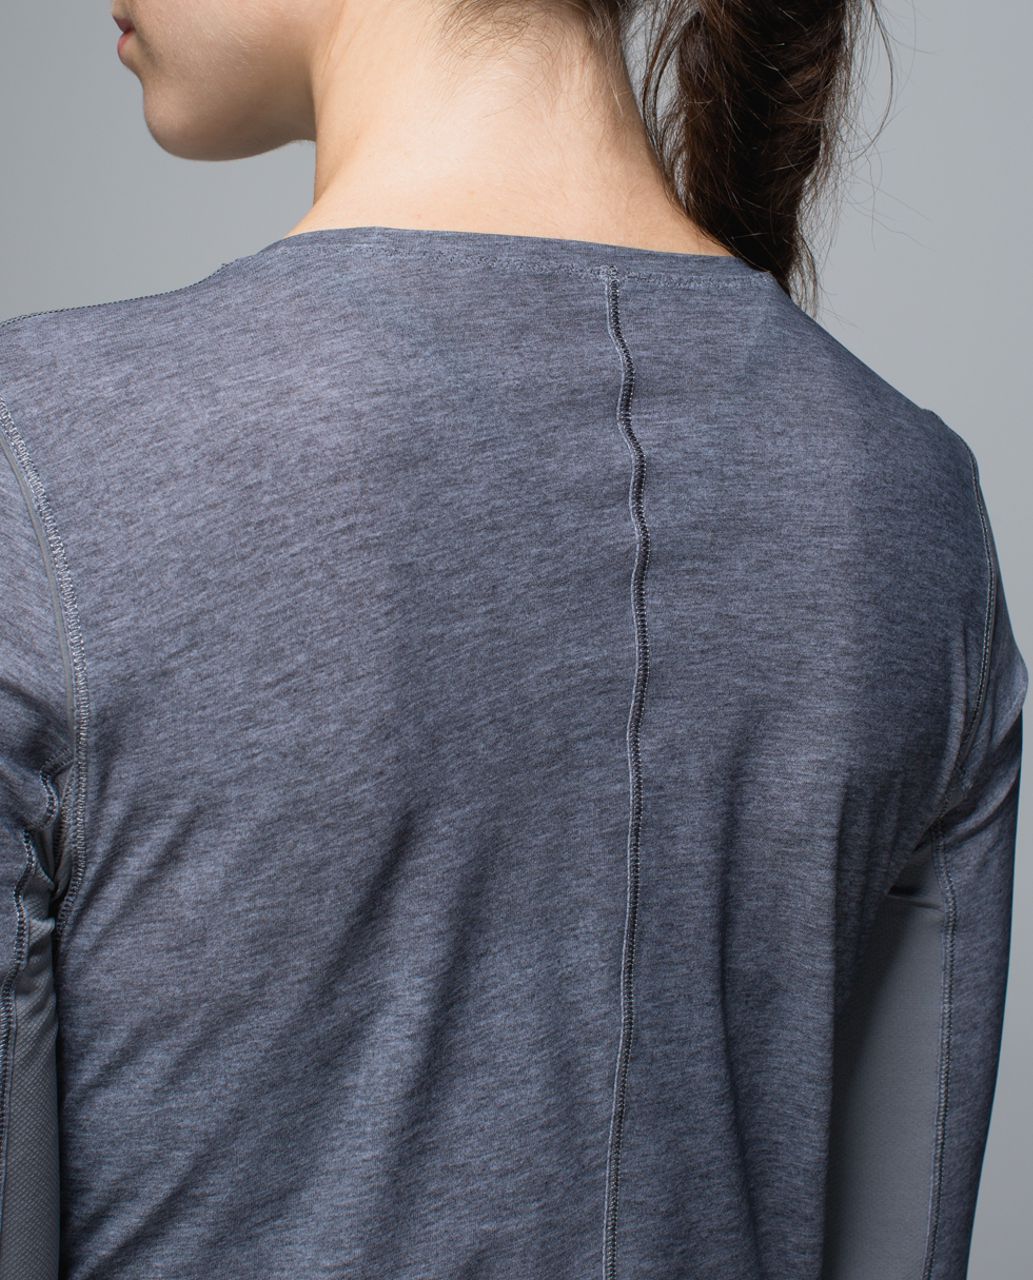 Lululemon Runbeam Long Sleeve - Heathered Texture Printed Ambient Grey / Slate